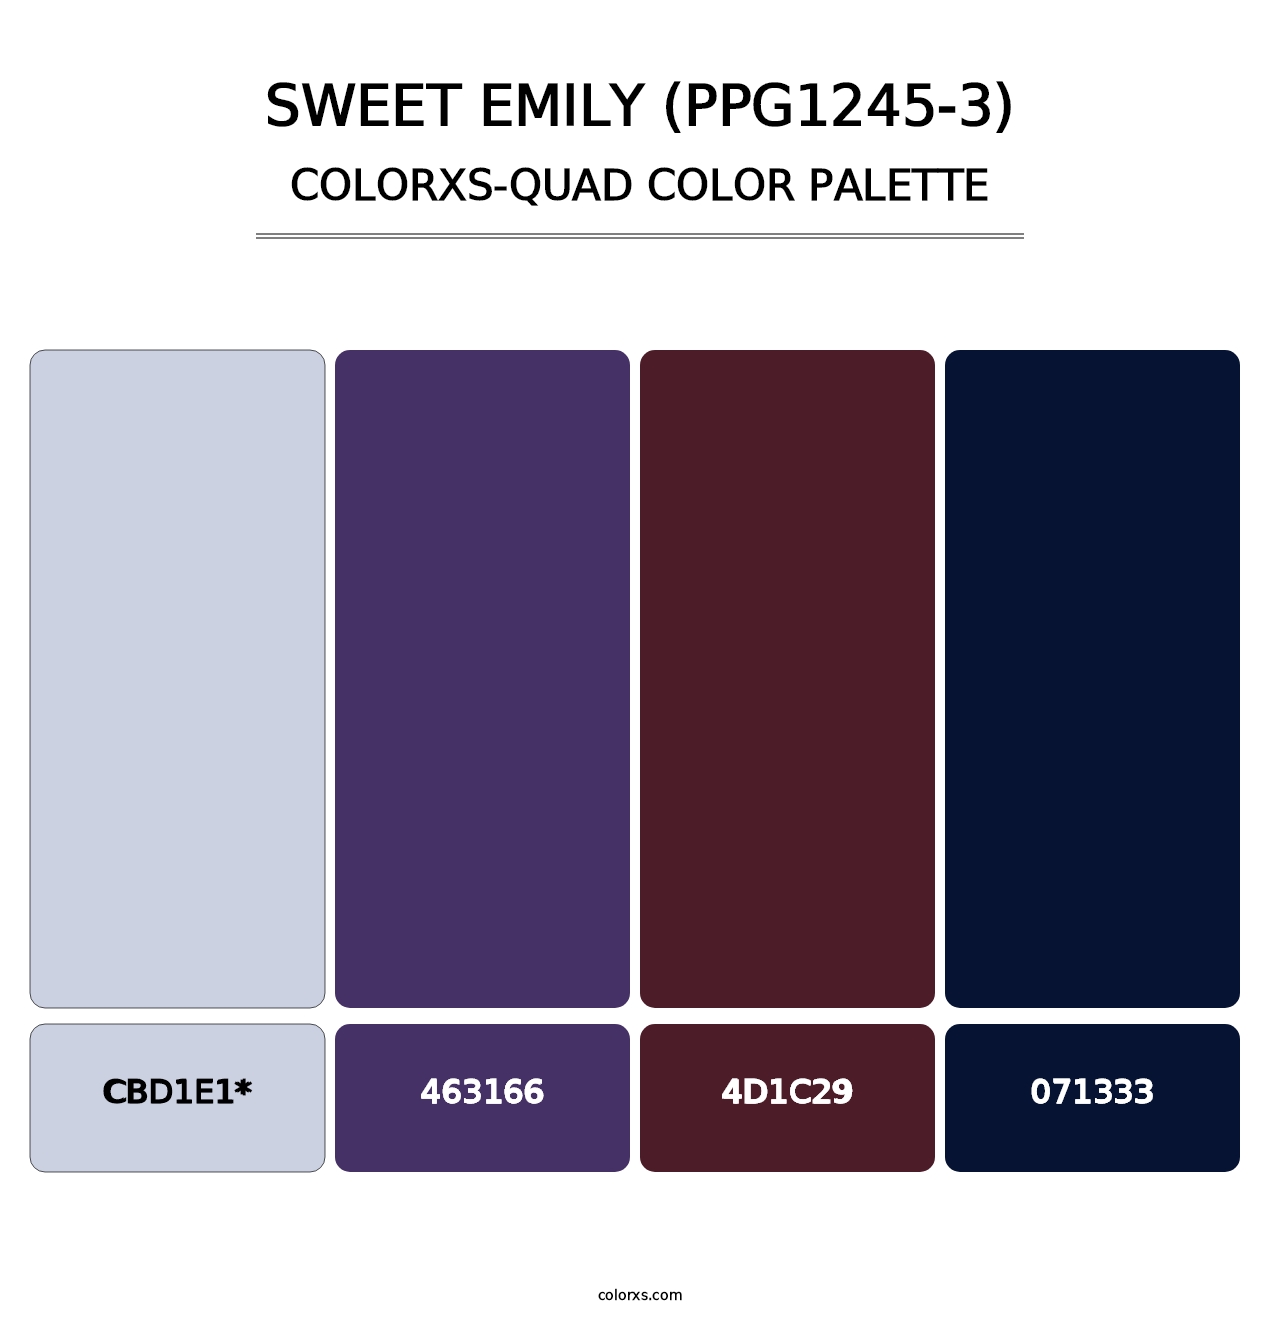 Sweet Emily (PPG1245-3) - Colorxs Quad Palette